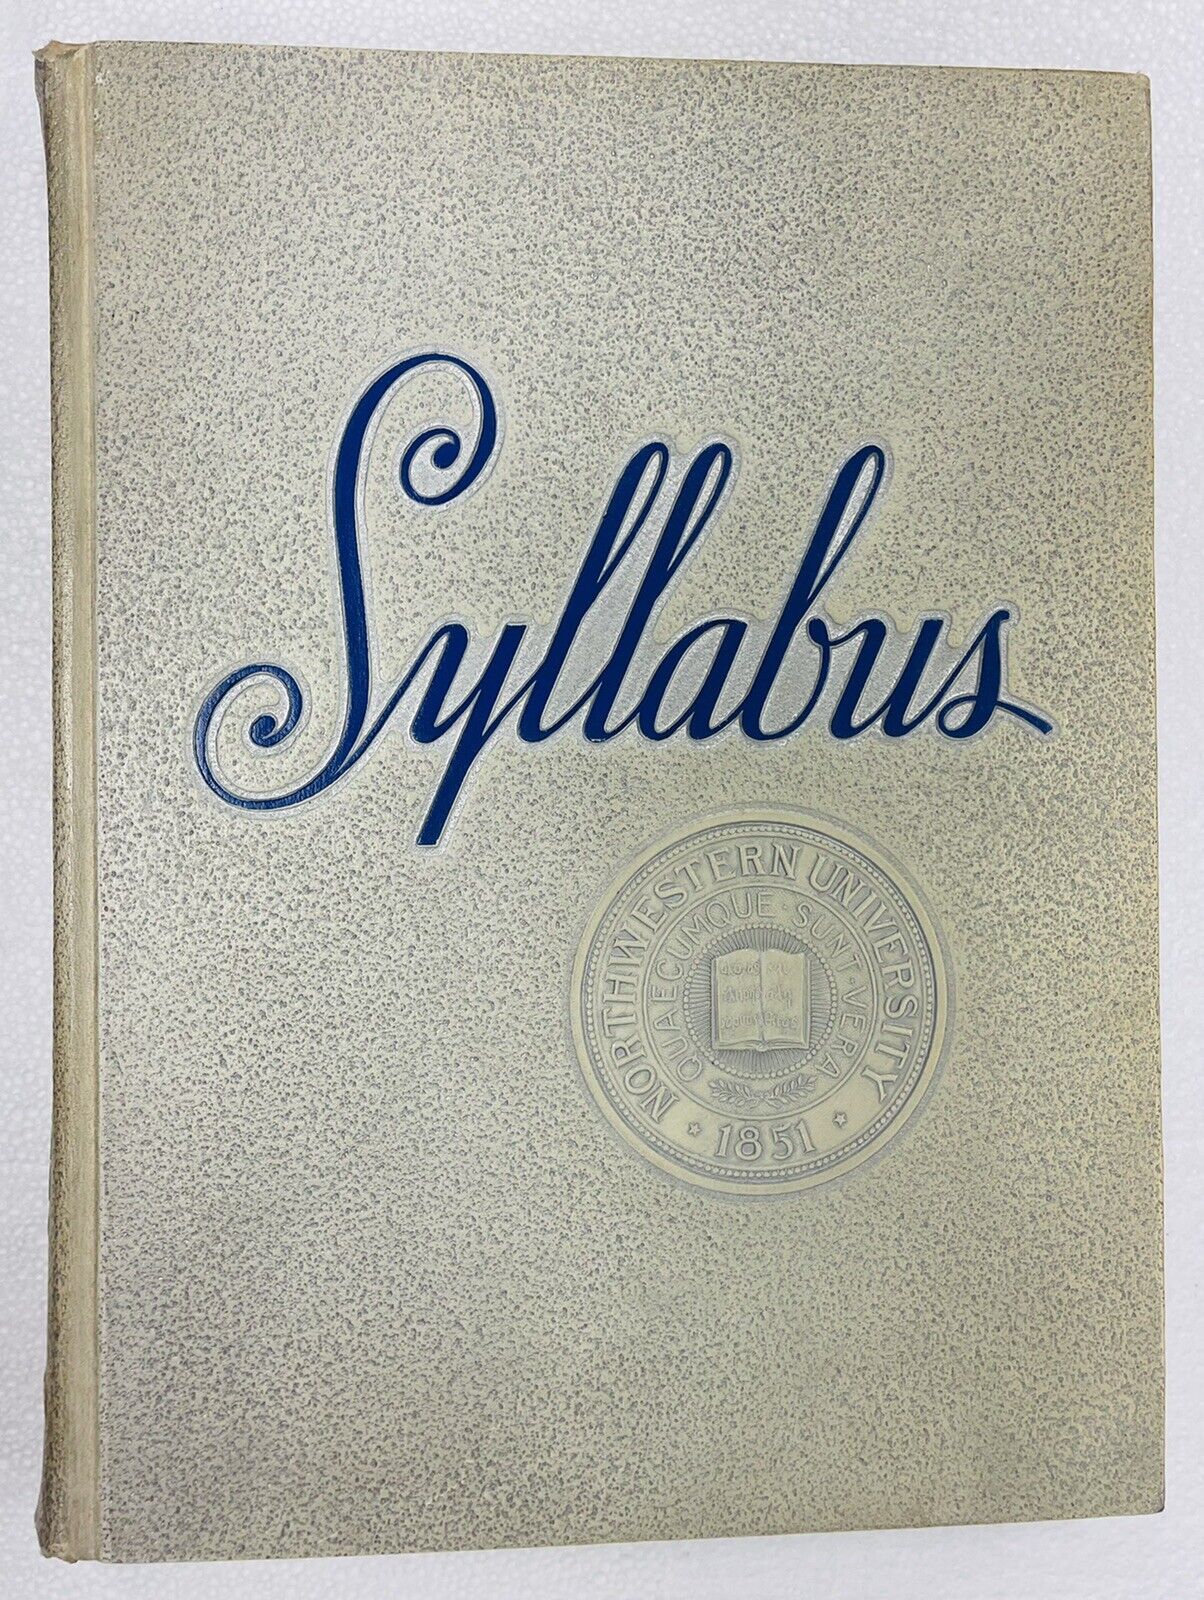 1962 Northwestern University Yearbook - The Syllabus